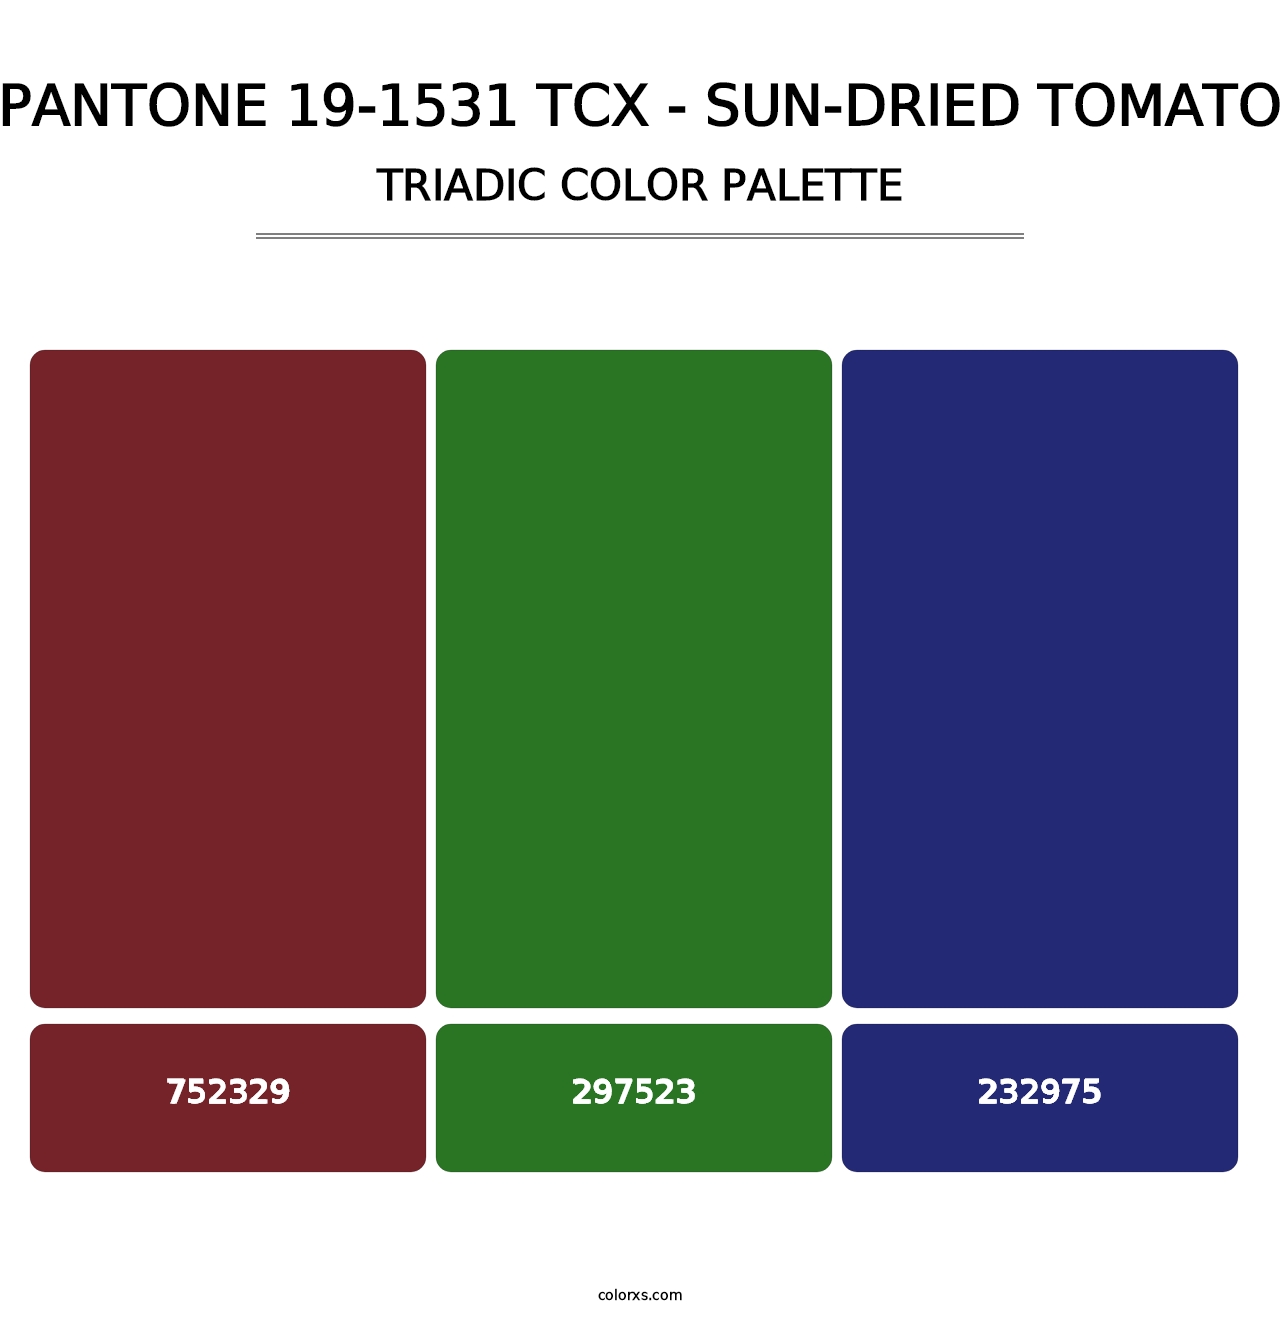 PANTONE 19-1531 TCX - Sun-Dried Tomato - Triadic Color Palette